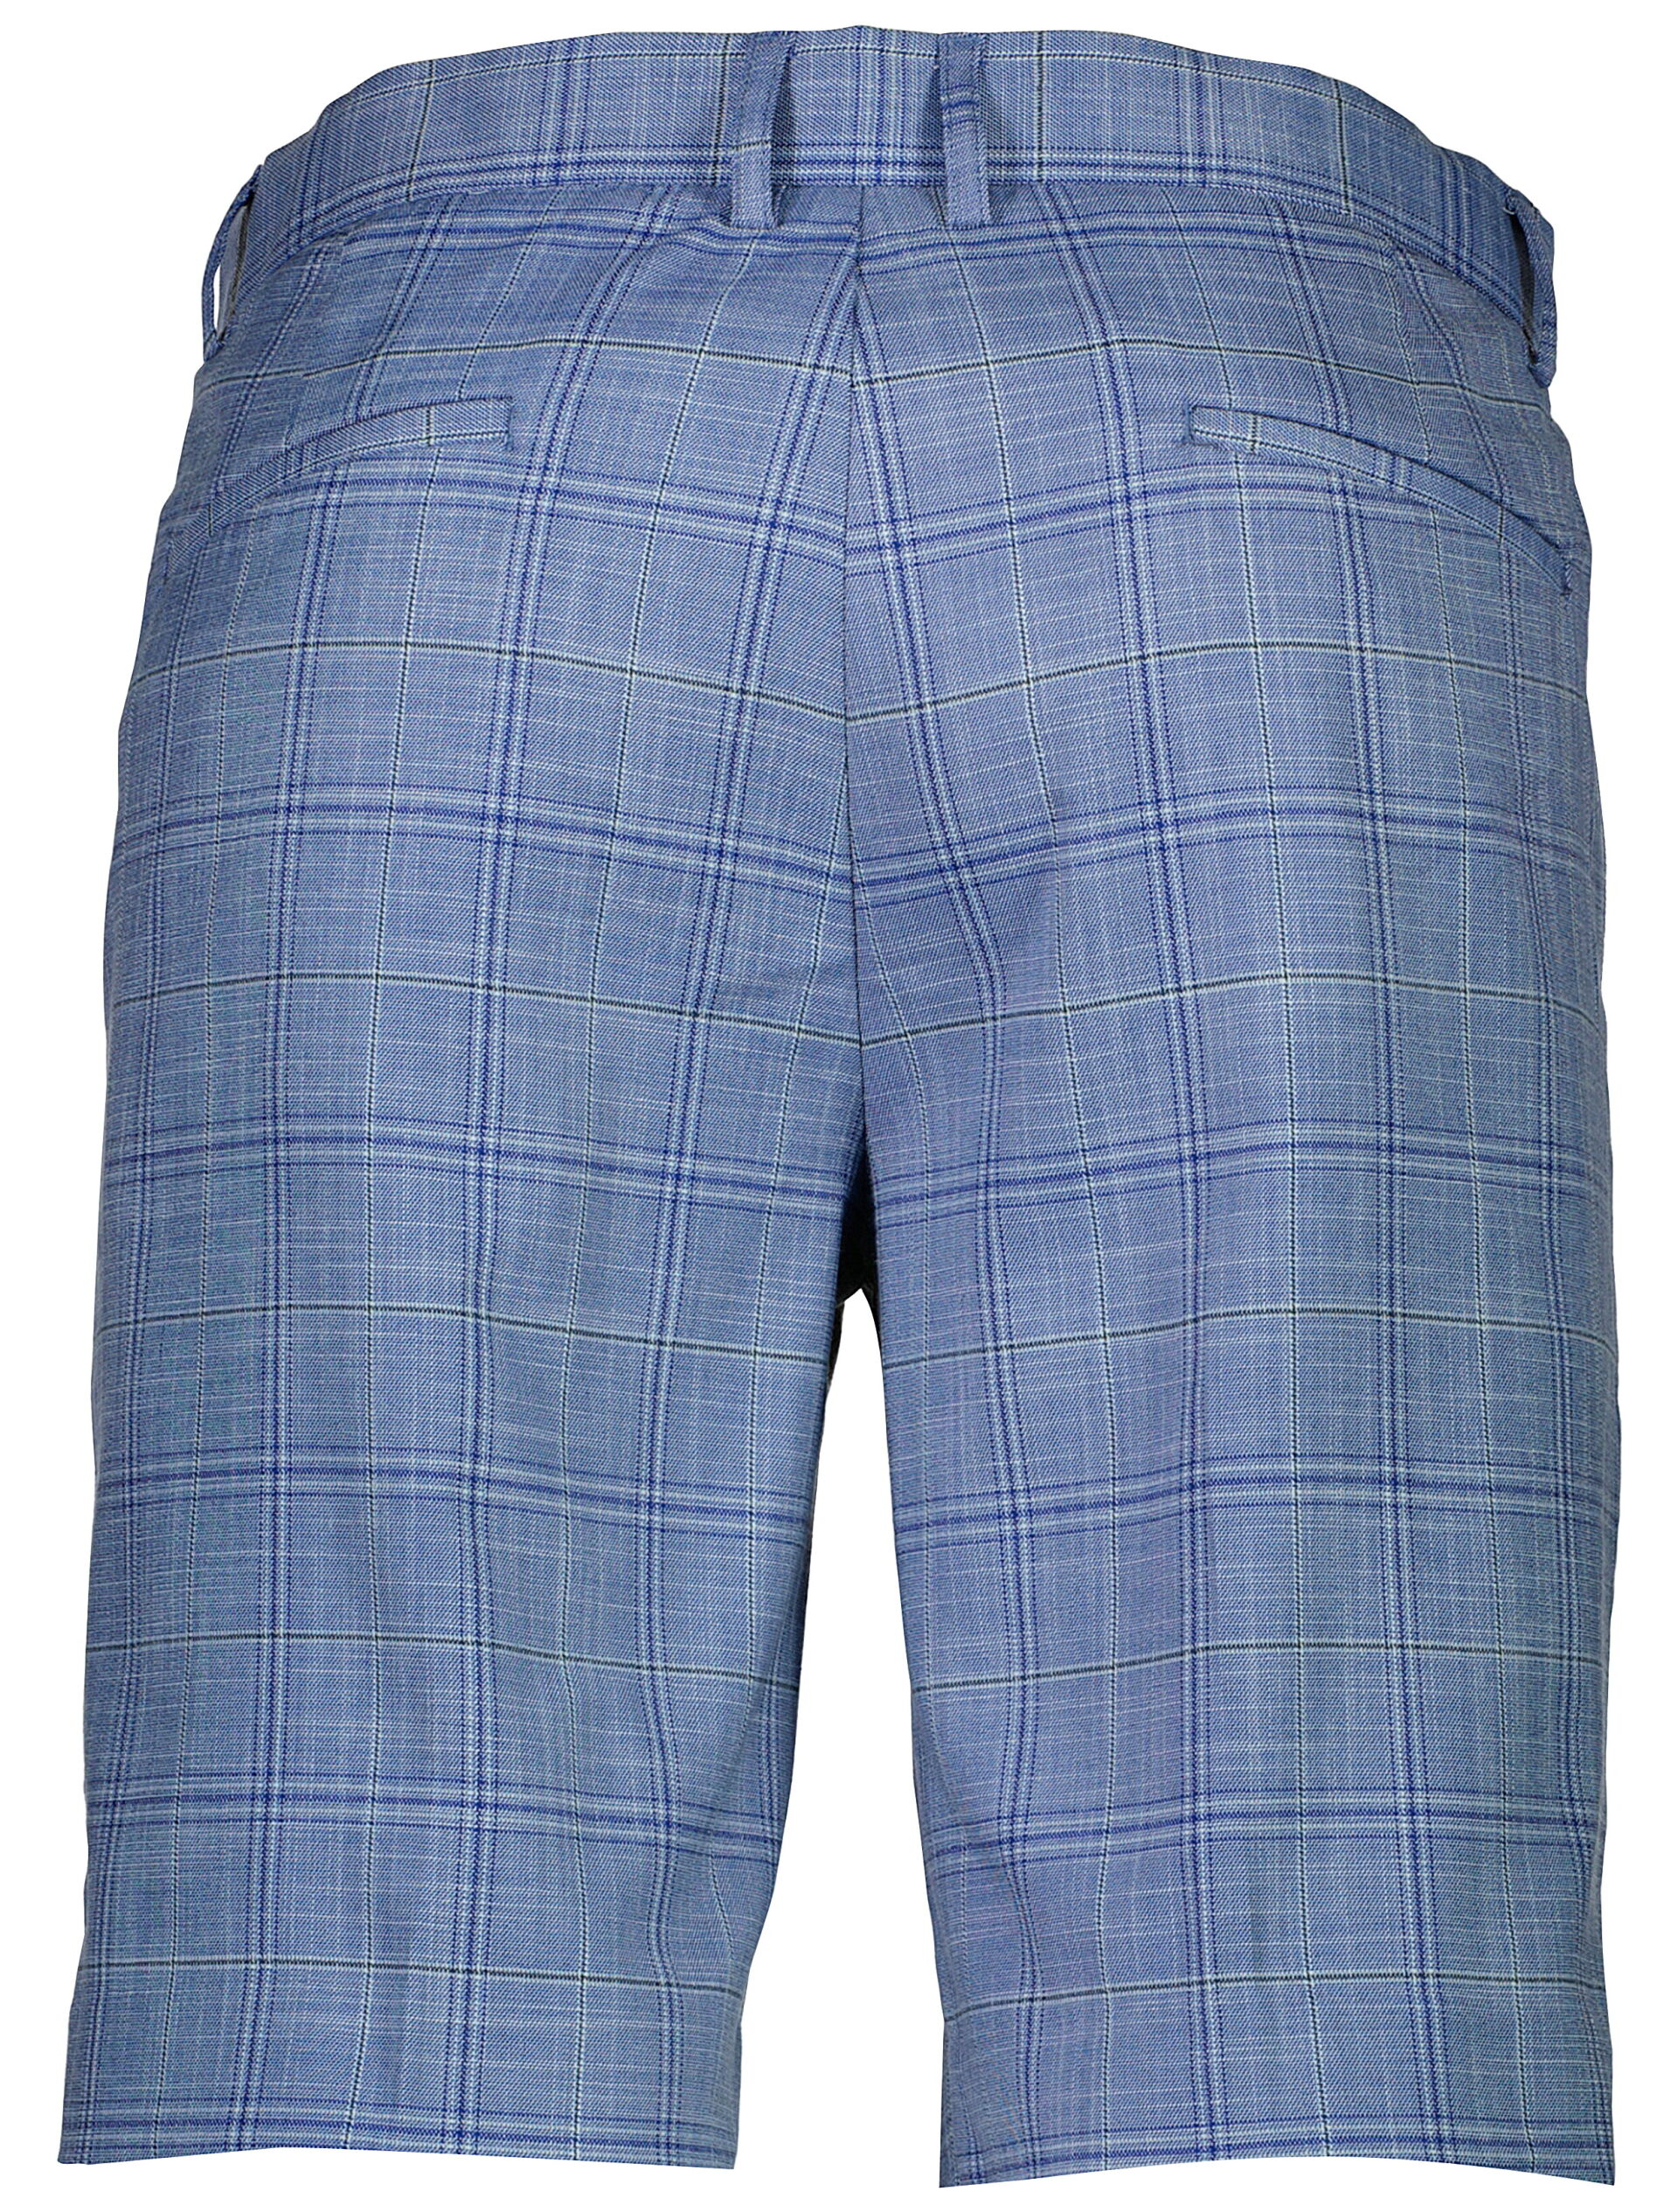 Casual shorts 30-501012